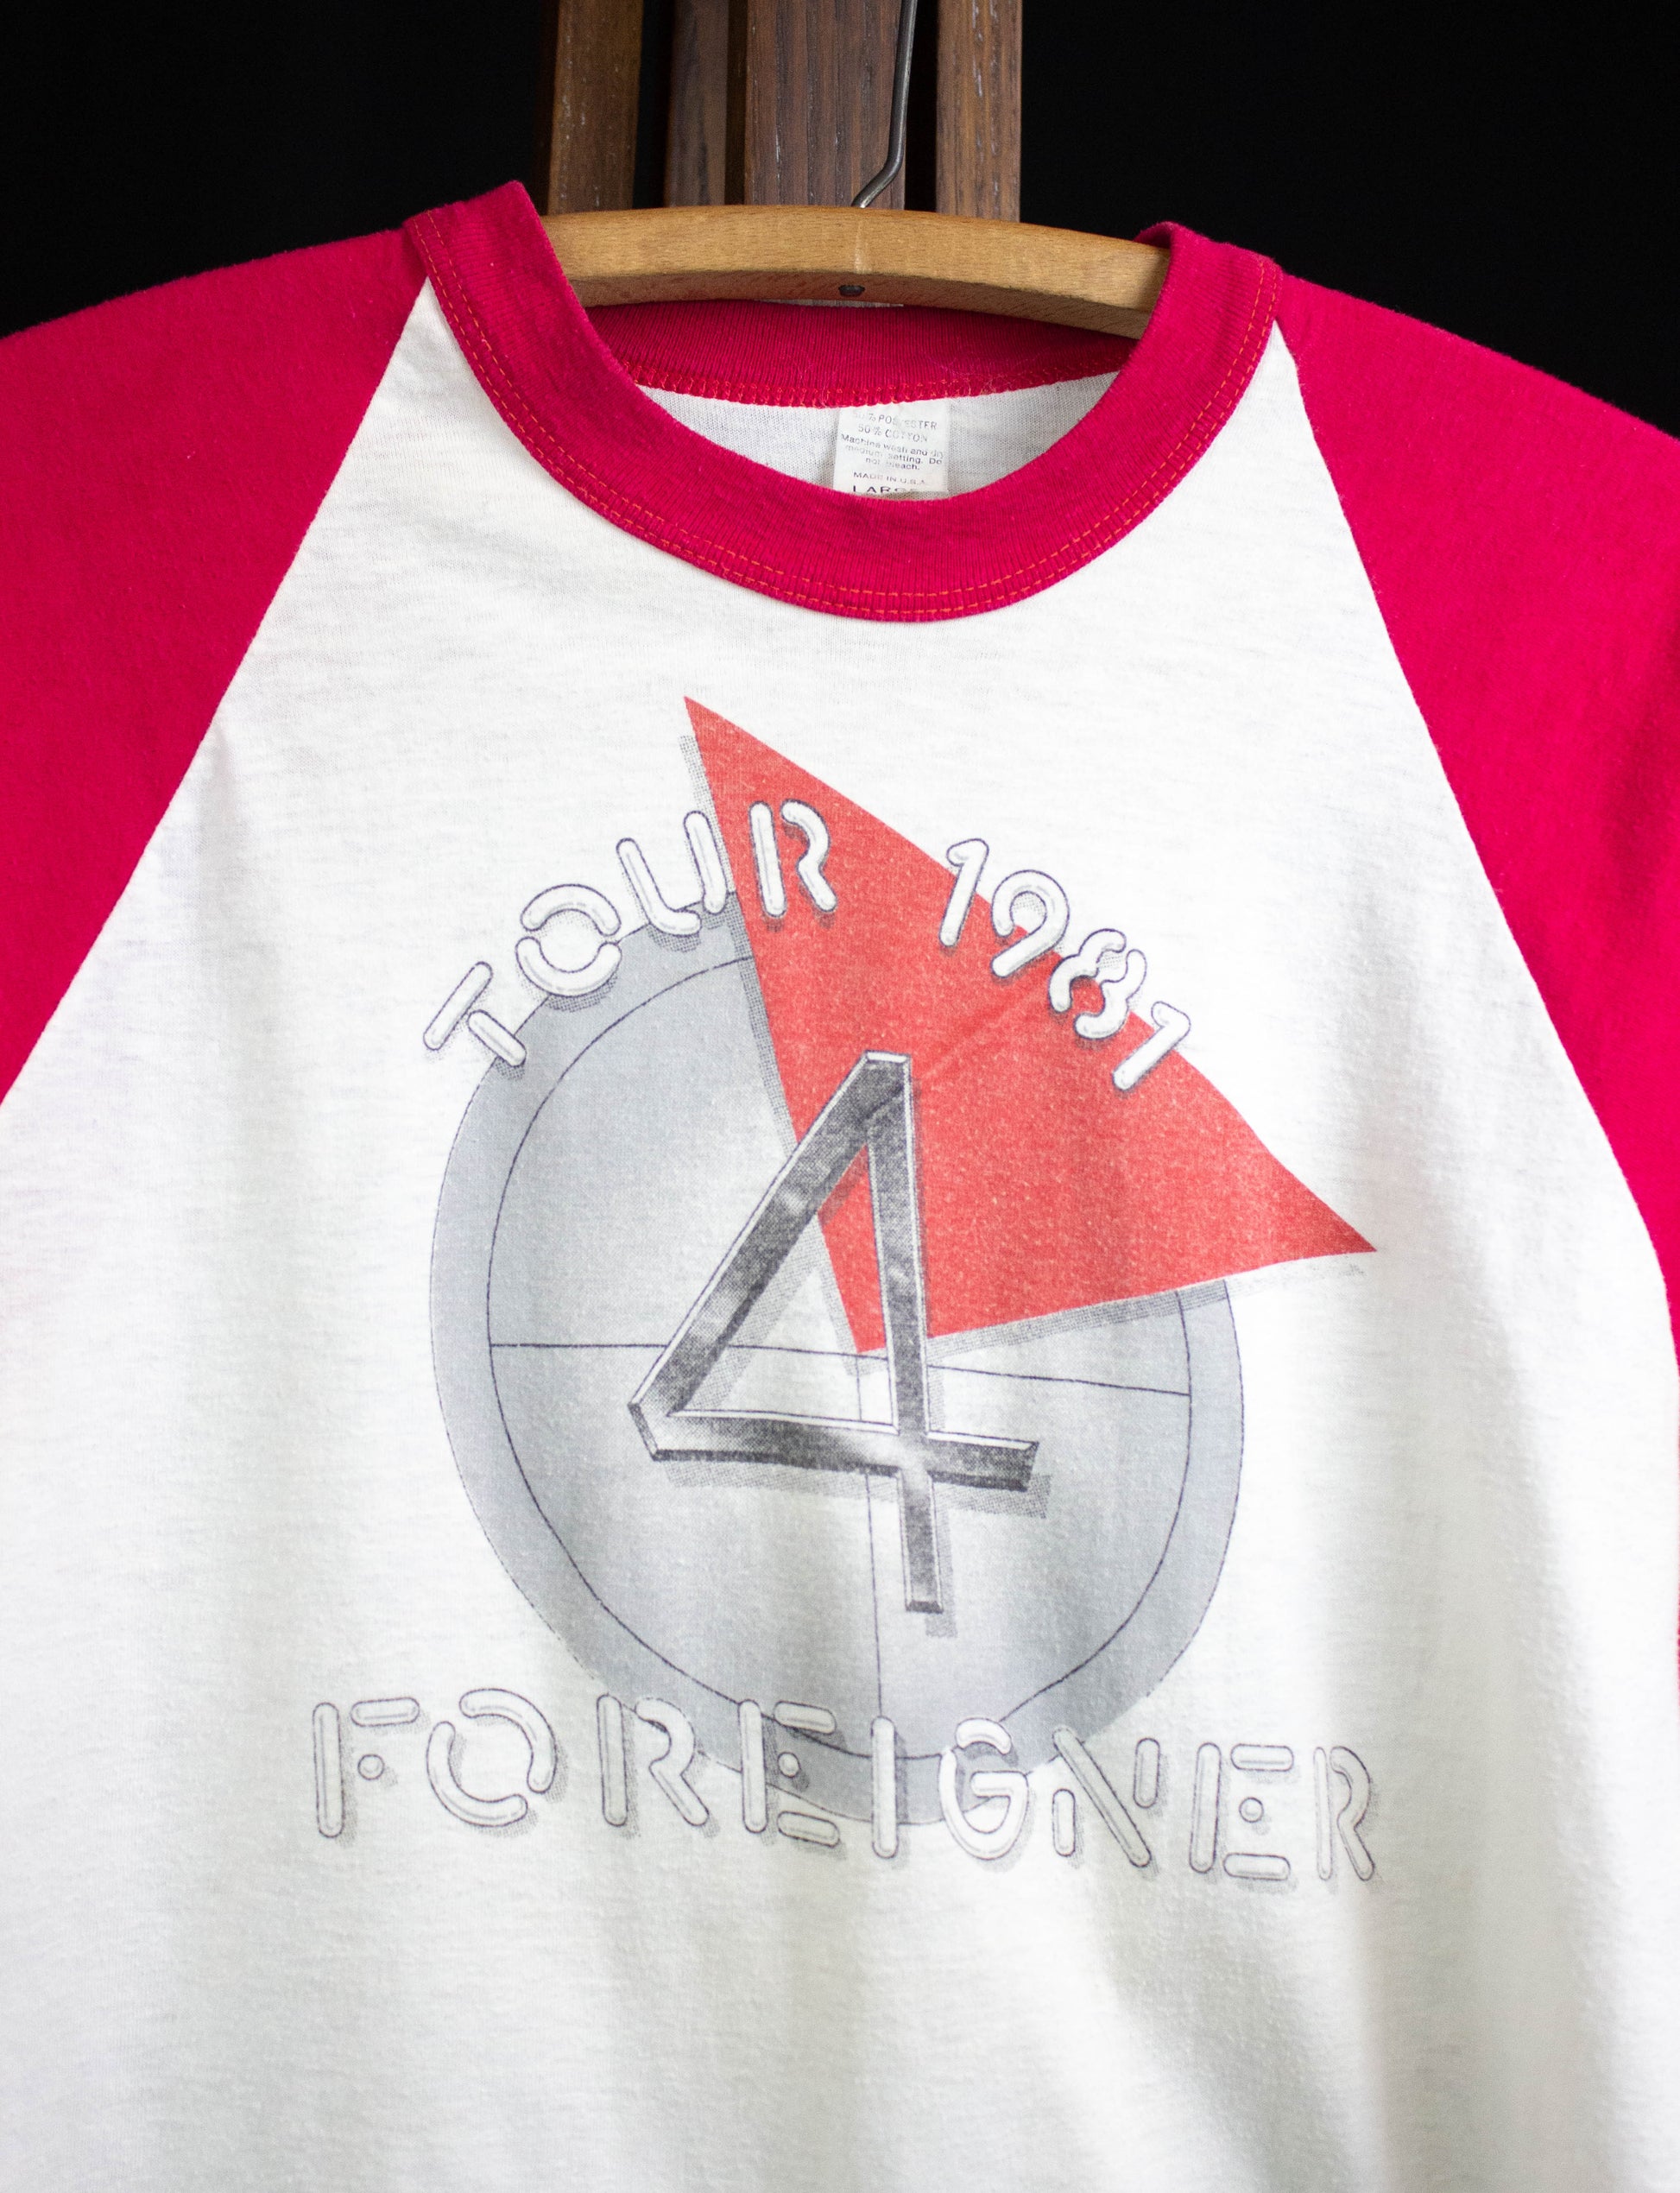 Vintage Foreigner 1981 Tour Concert T Shirt White and Red Raglan Medium